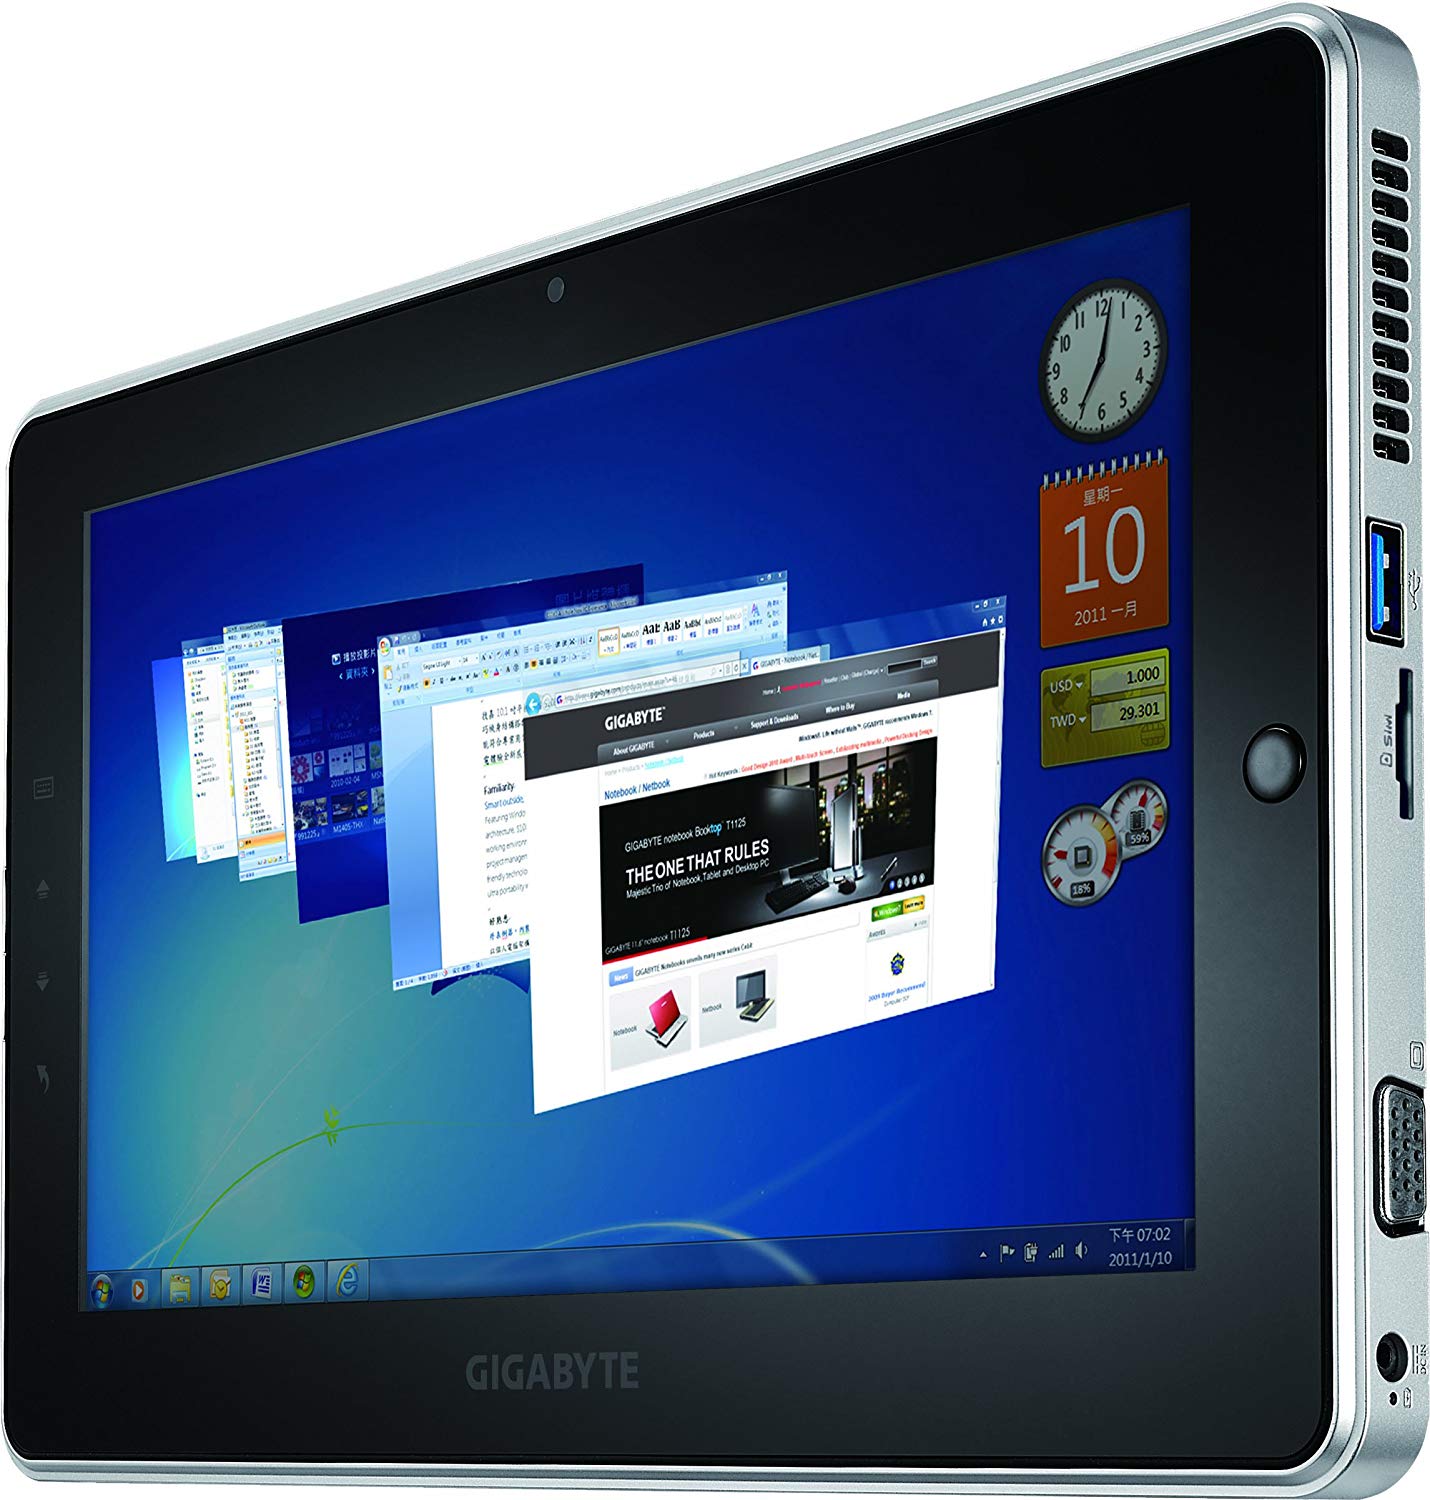 Gigabyte S1080 10.1-Inch Tablet Computer